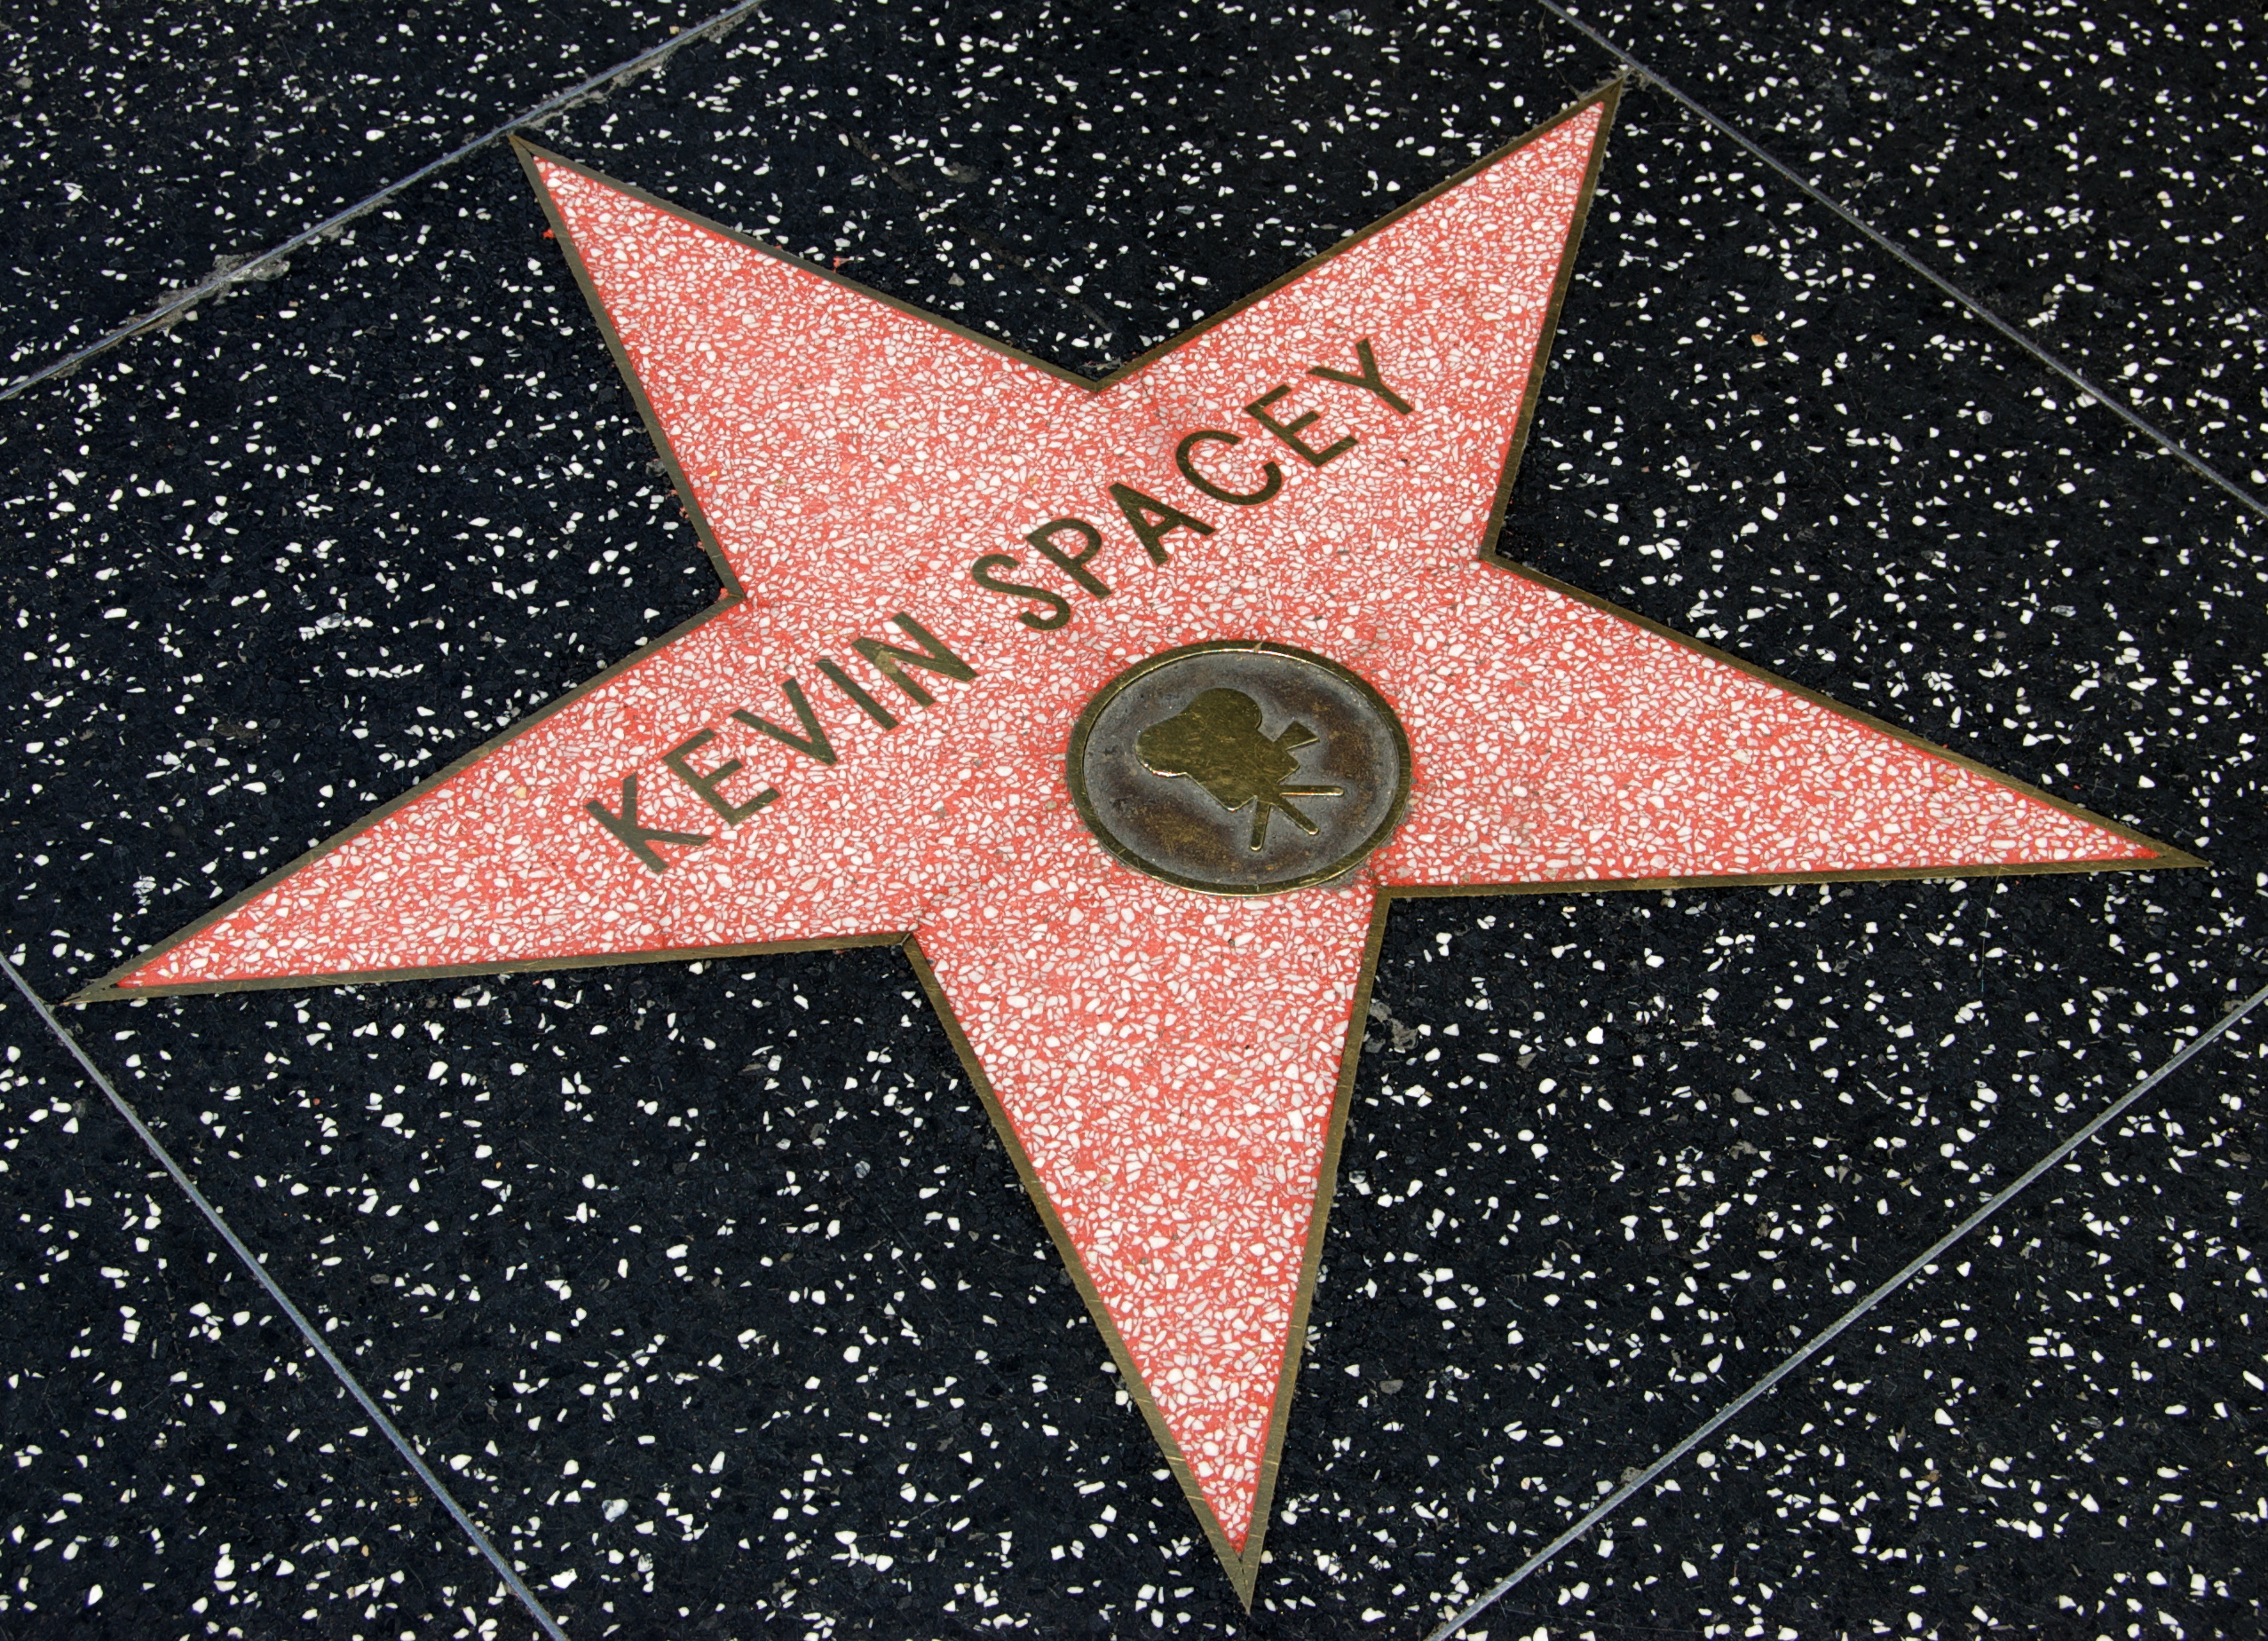 Kevin Spaceys Stern auf dem Walk of Fame in Hollywood.